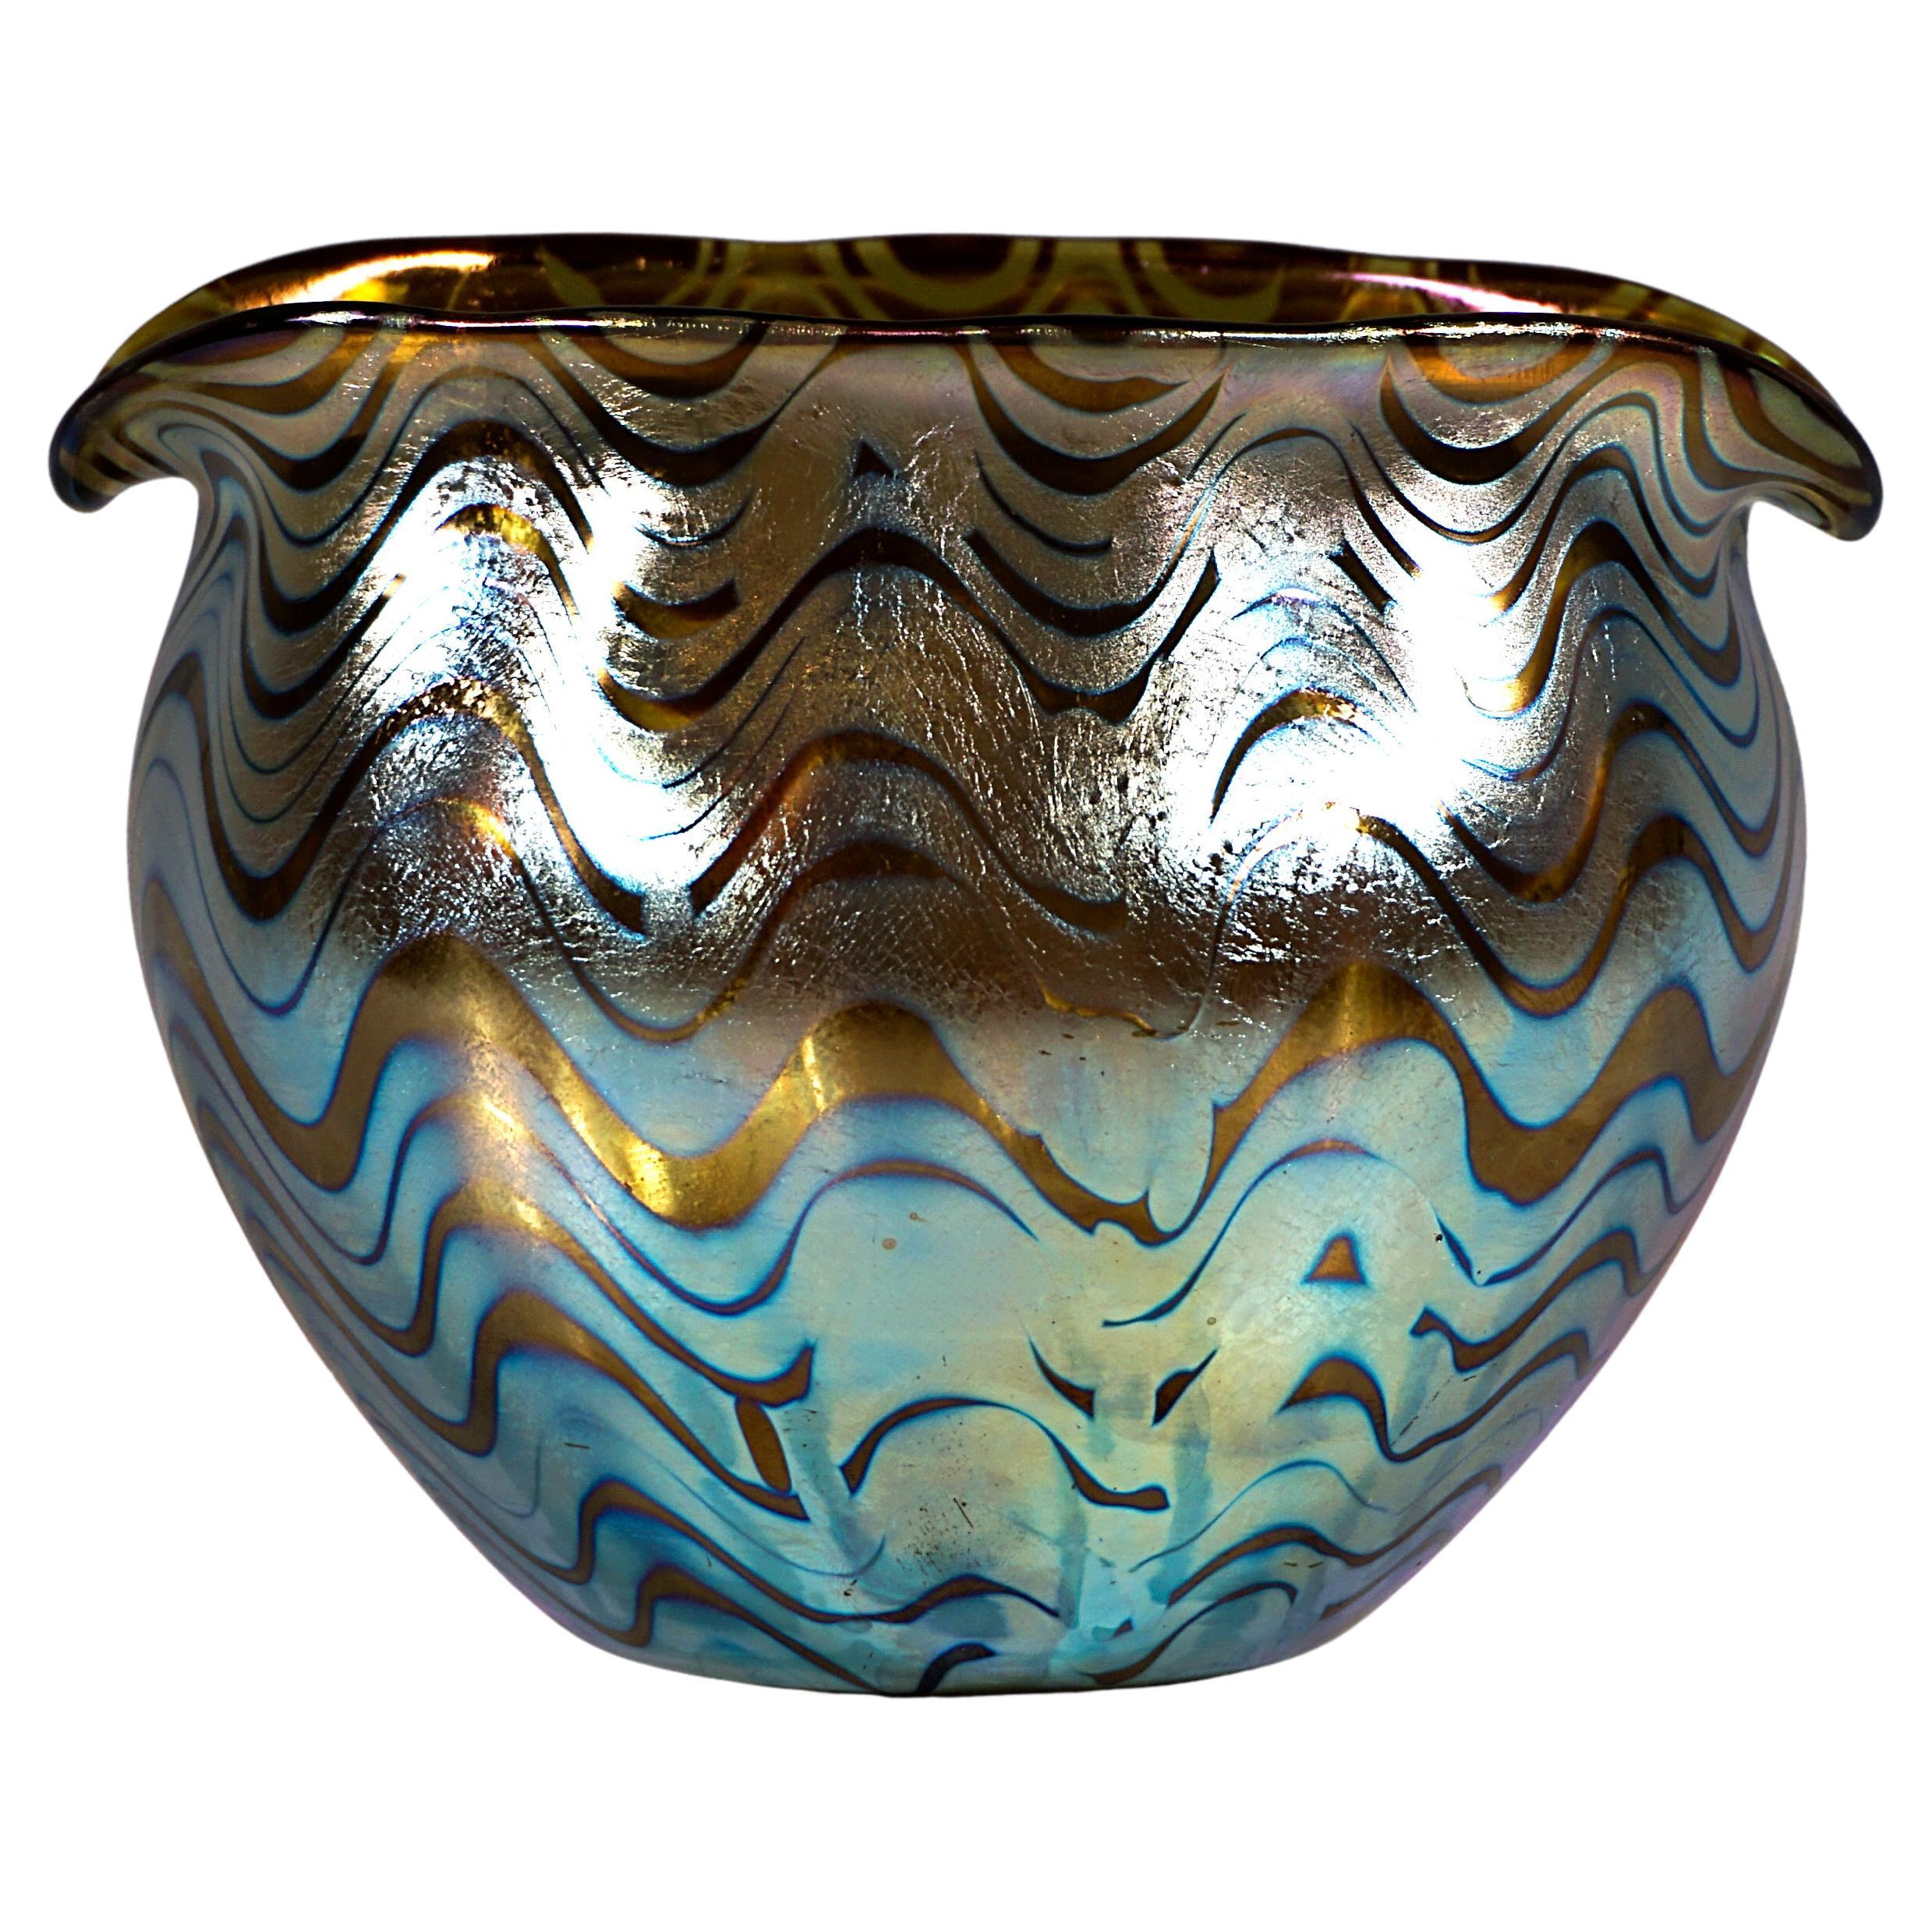 Loetz Art Nouveau Glass Vase Phenomenon Gre Crete 7767, Austria-Hungary, Ca 1900 For Sale